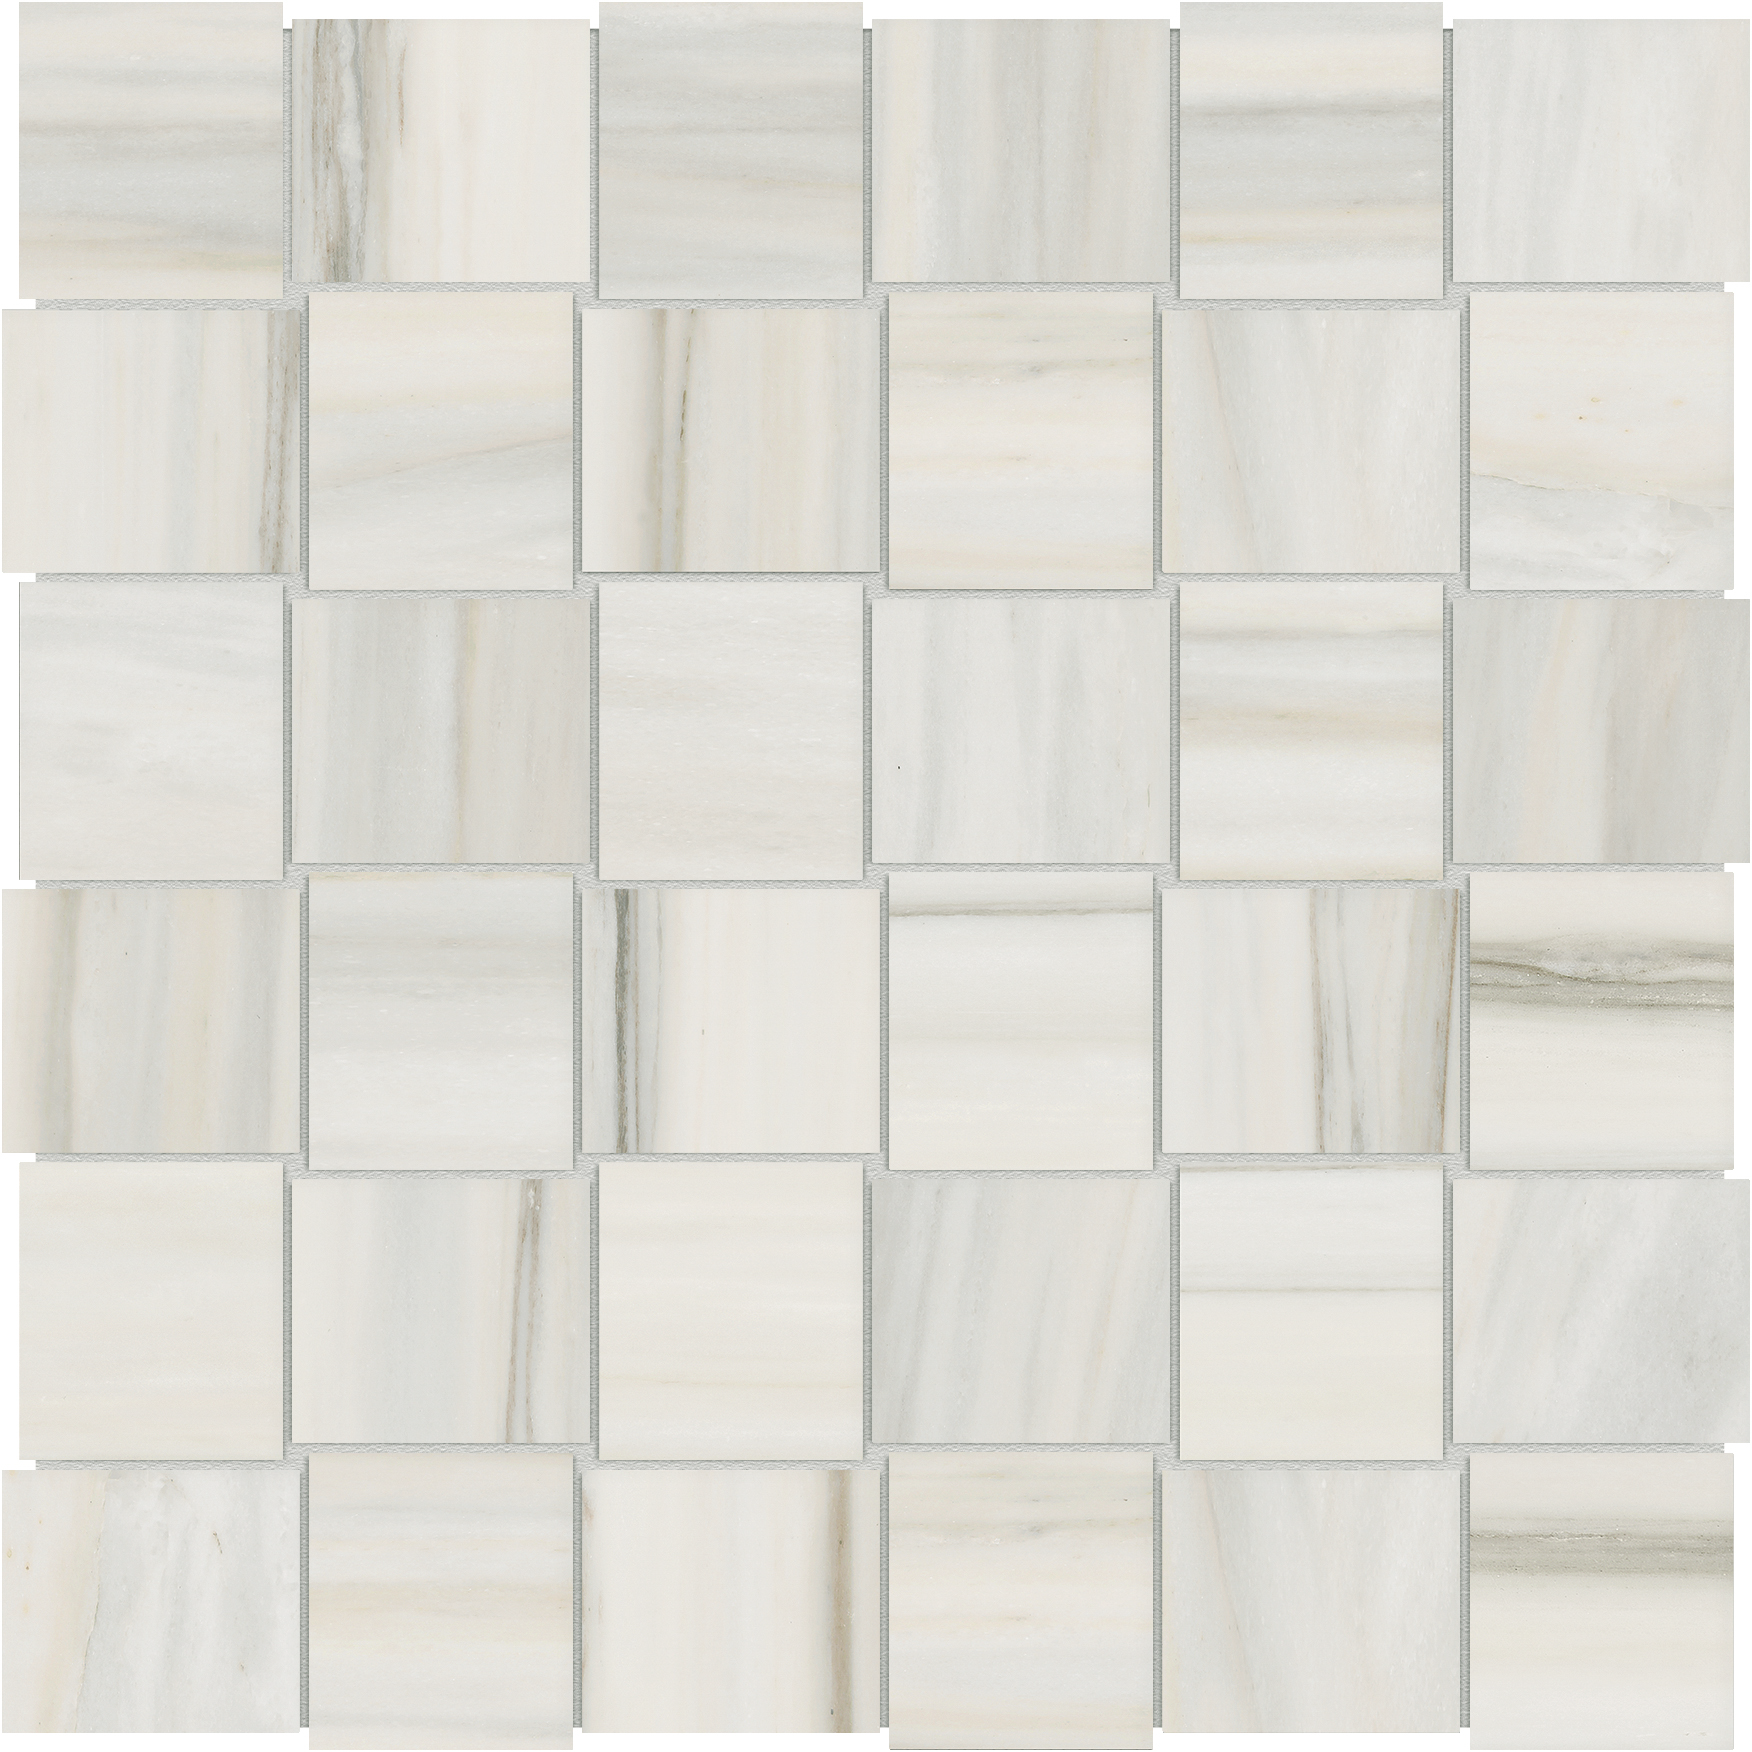 zebrino basketweave 2x2-inch pattern glazed porcelain mosaic from mayfair anatolia collection distributed by surface group international polished finish straight edge edge mesh shape